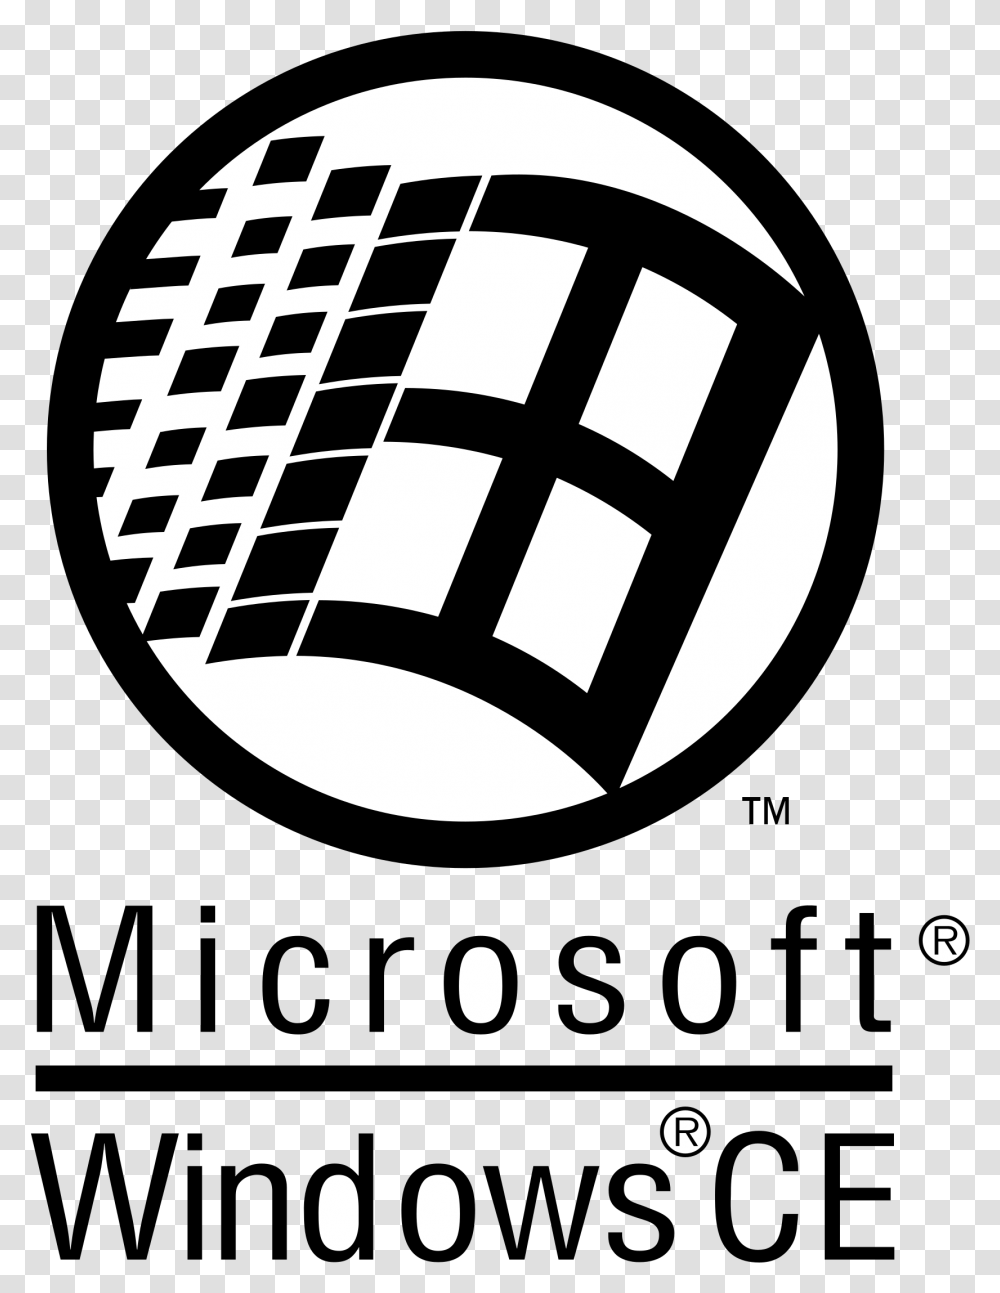 Microsoft Windows Ce Logo & Svg Vector Windows 98 Boot Screen, Stencil, Symbol, Lamp, Text Transparent Png